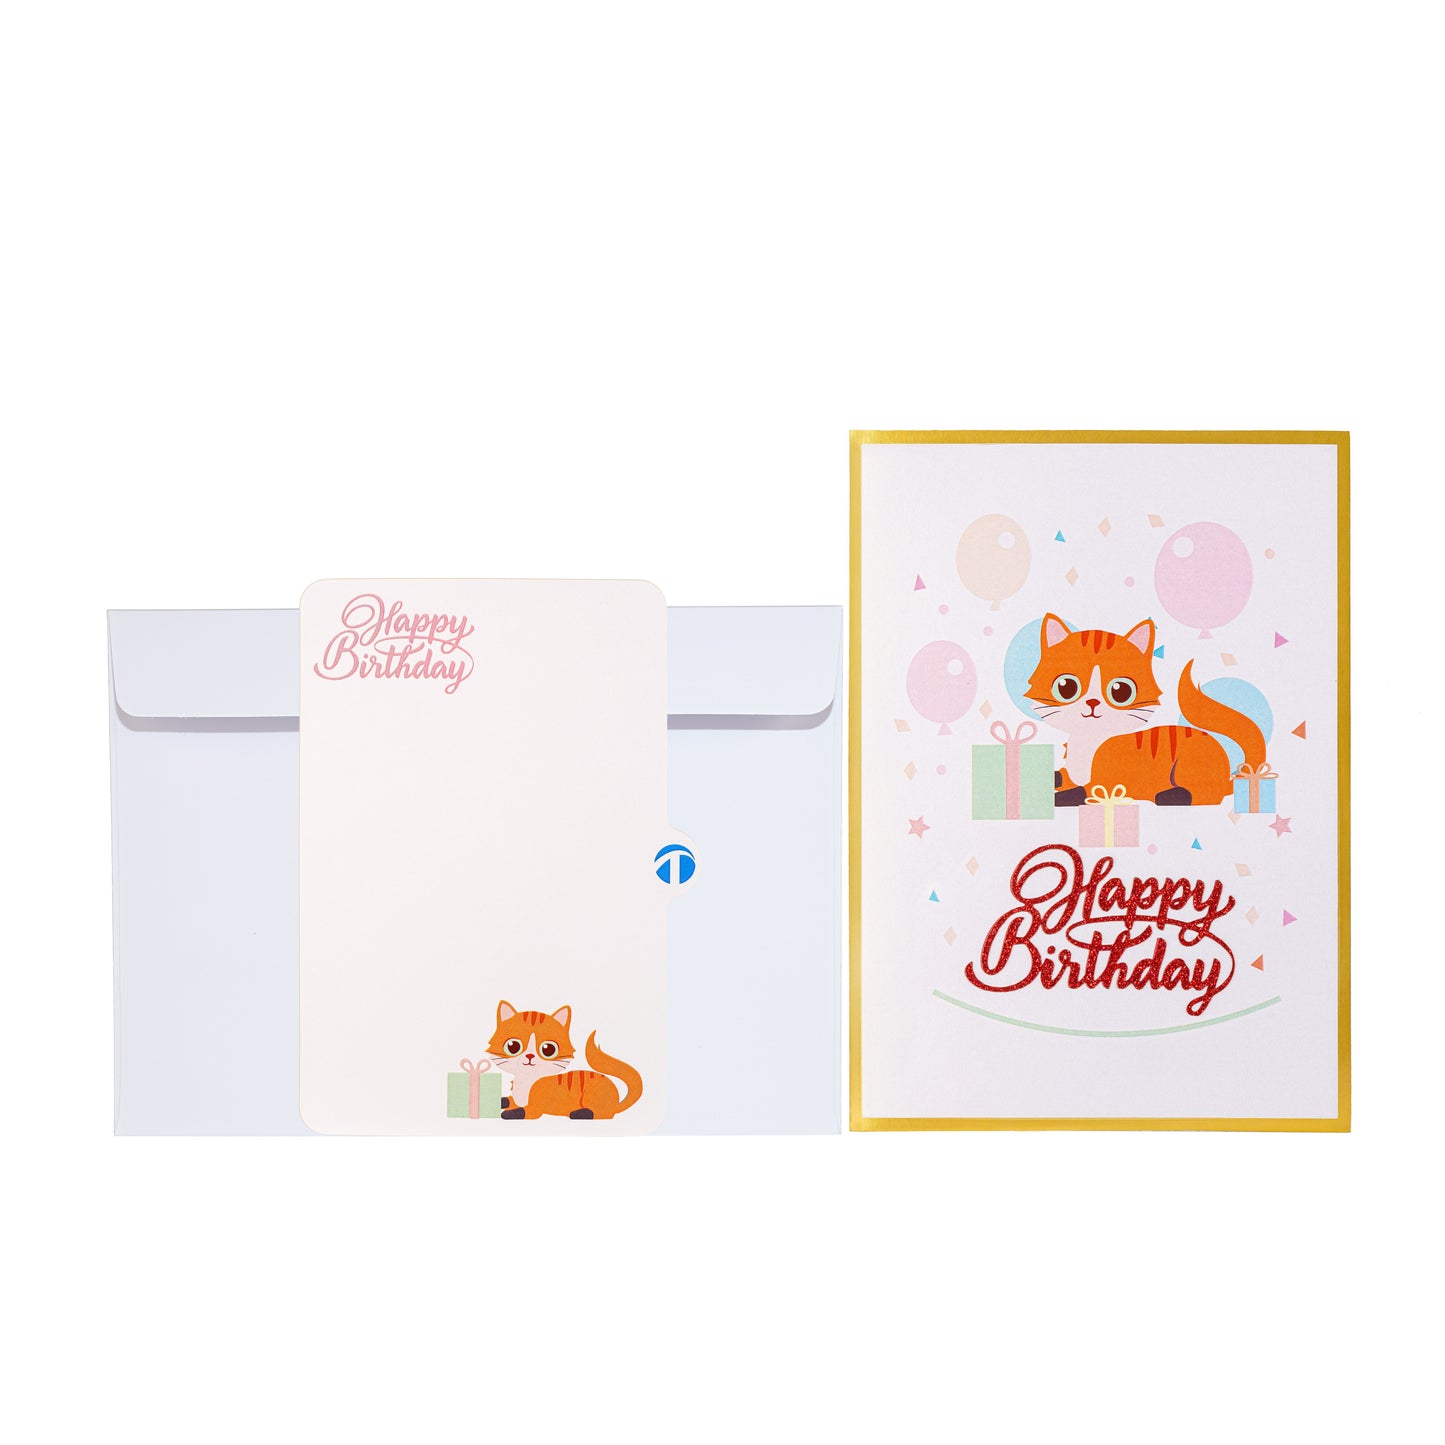 Cat Hold Gift Box Birthday Card